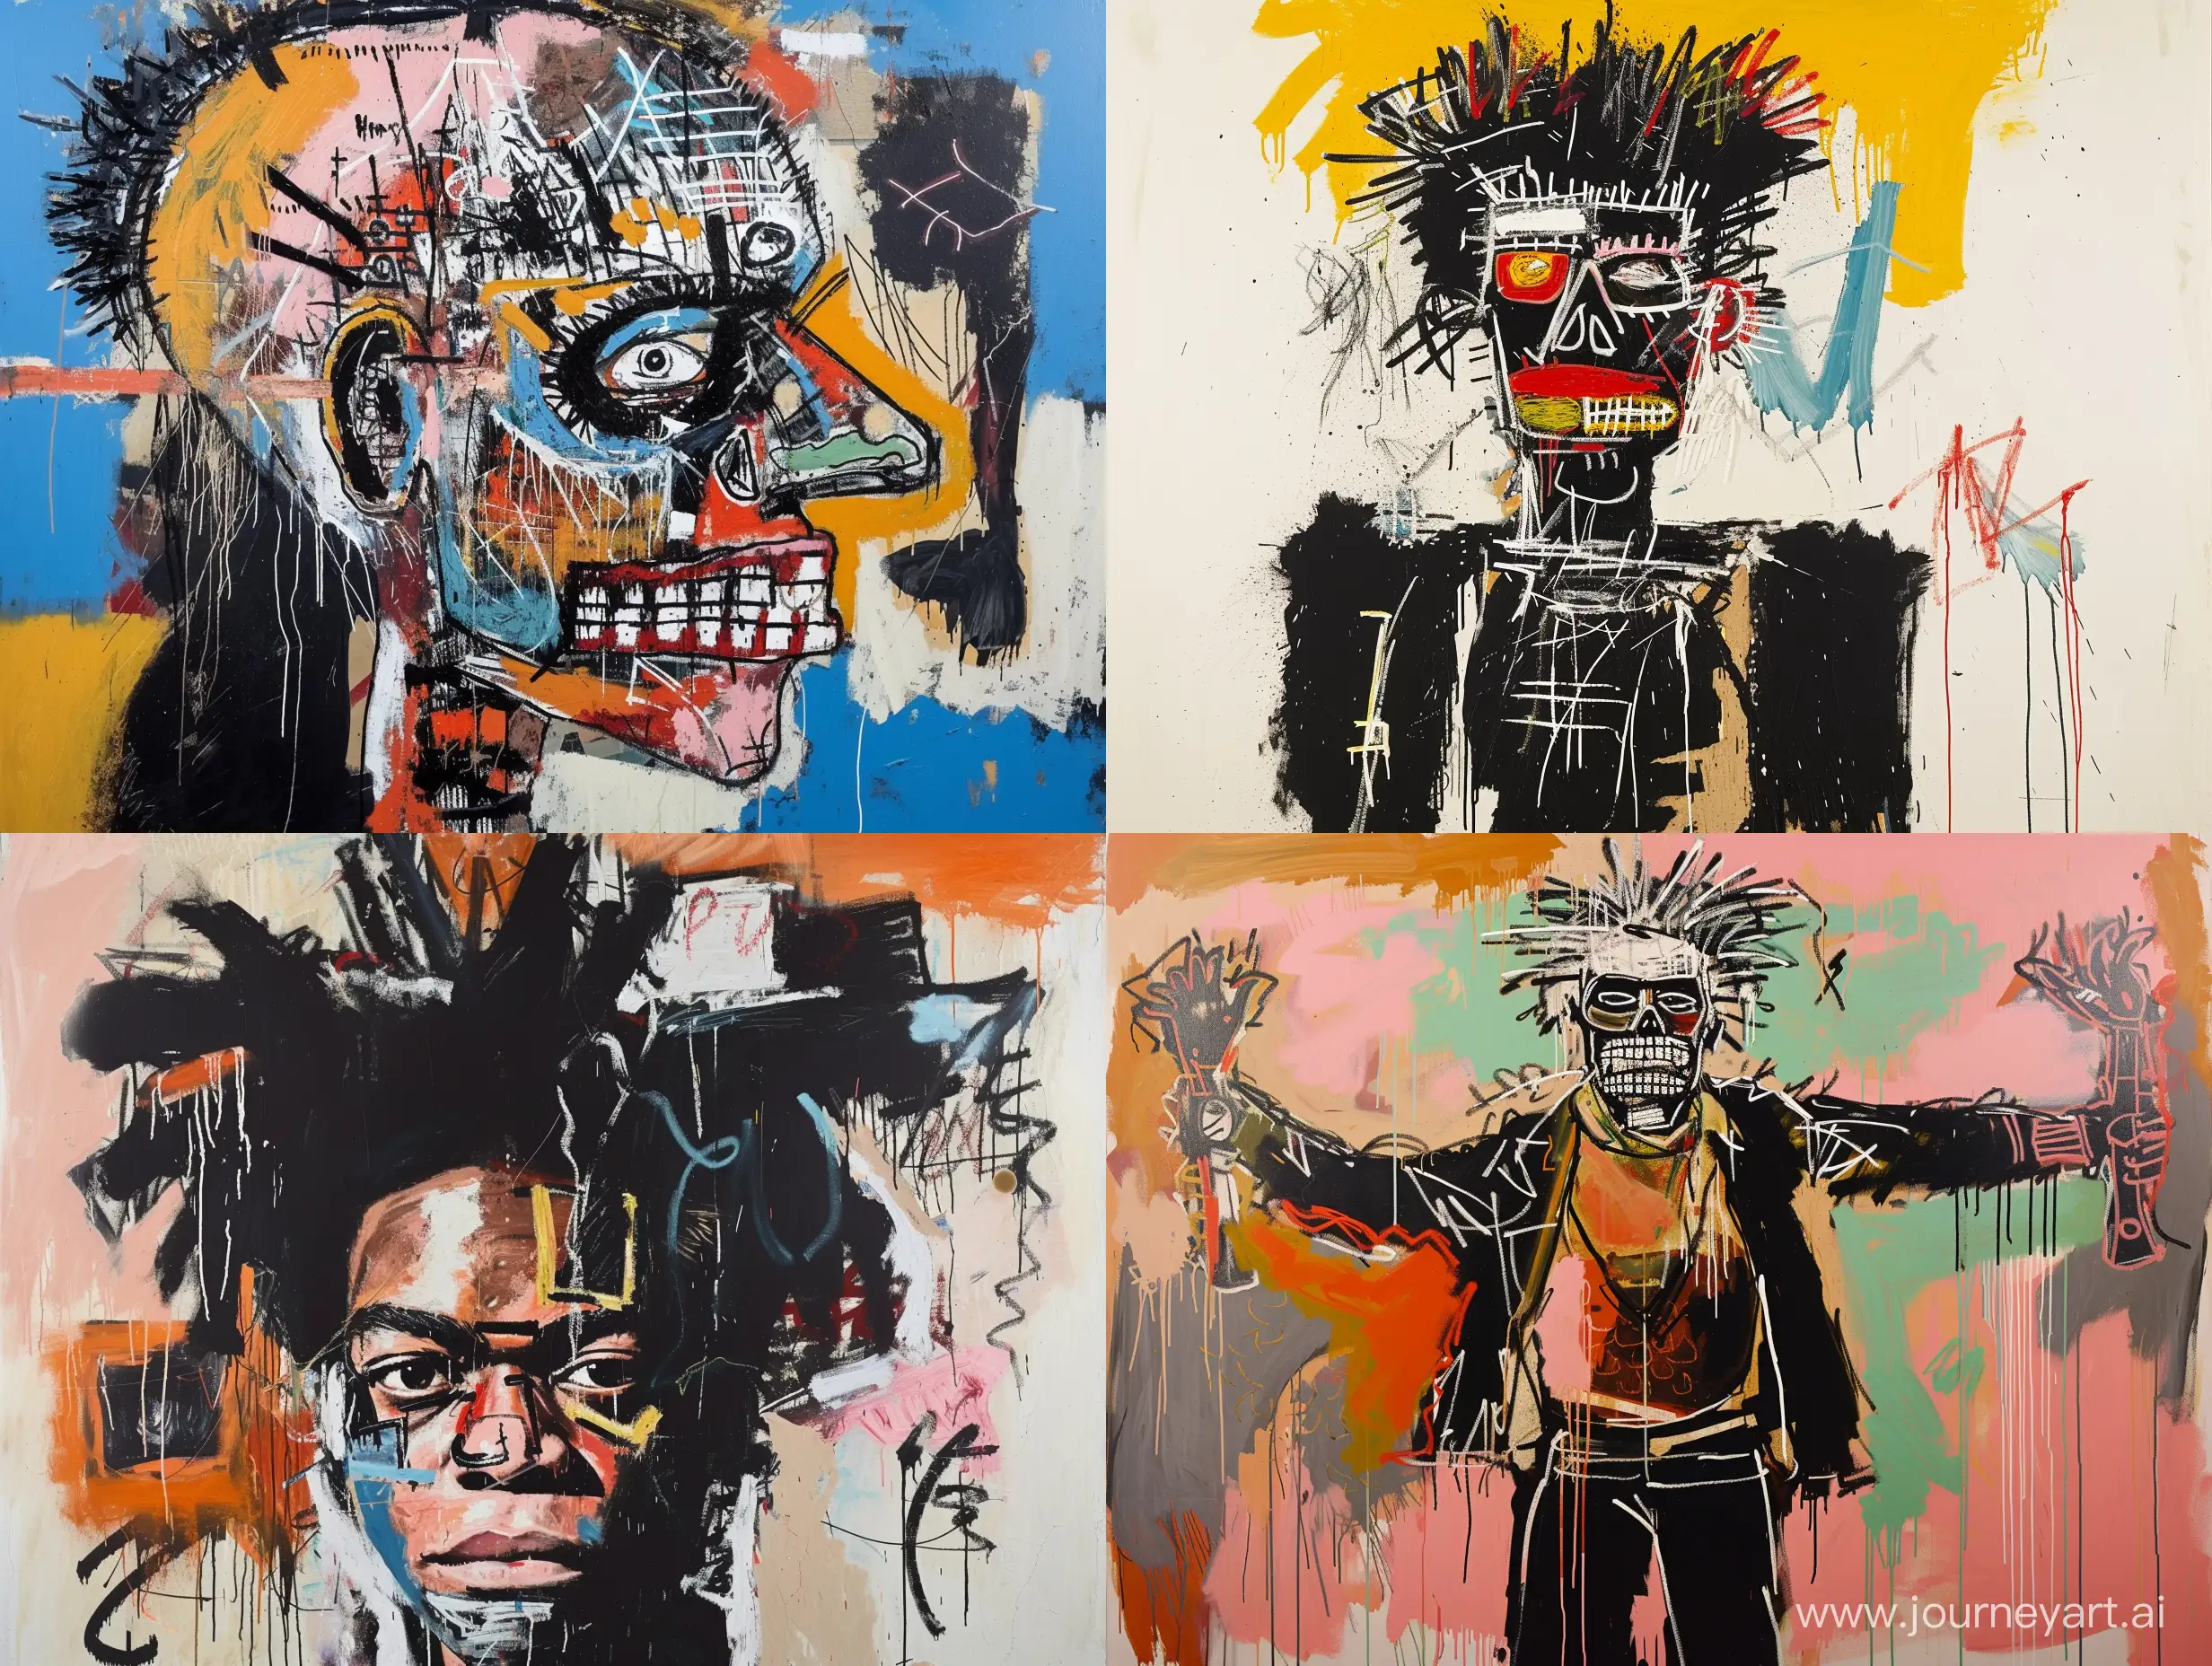 Basquiats-Influences-Exploring-African-Caribbean-and-Urban-Culture-in-Art